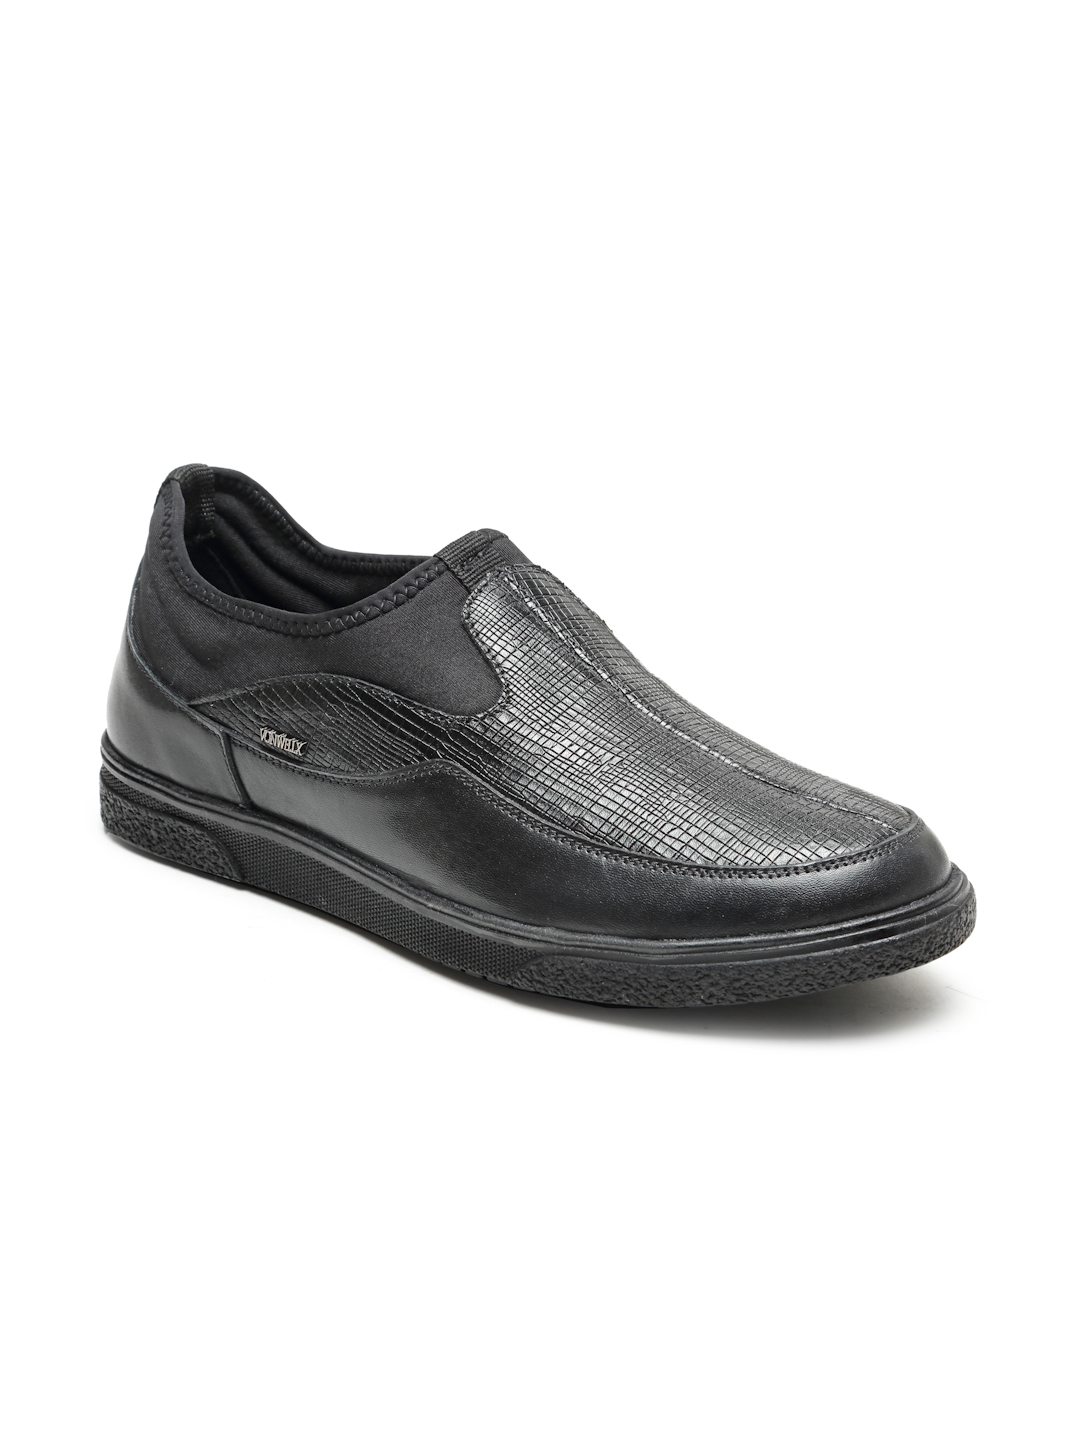 Buy Von Wellx Germany Comfort Men's Black Casual Loafers Everett Online in Kolkata